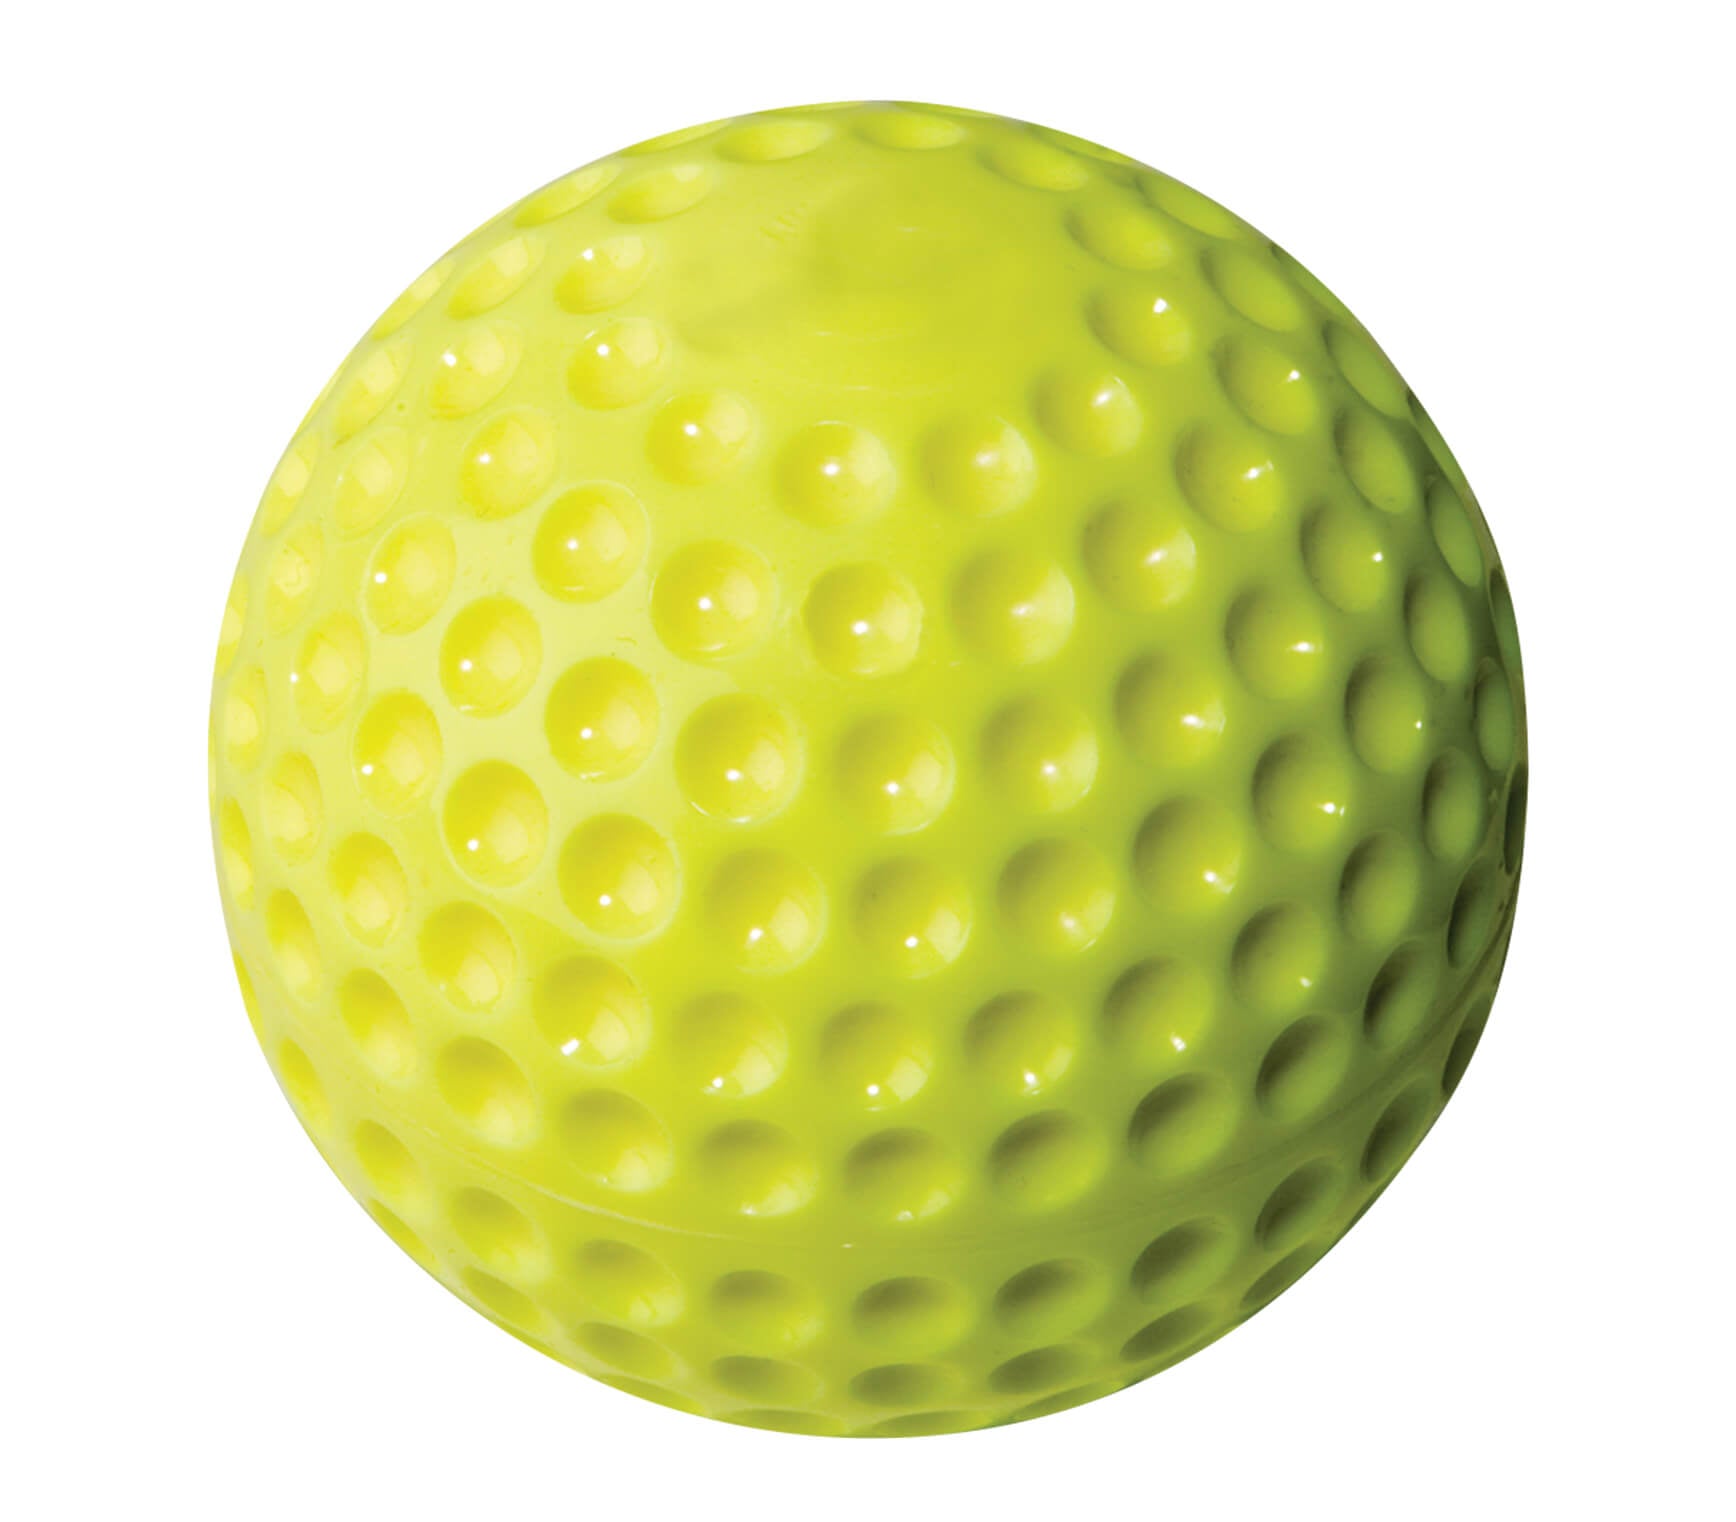 Rawlings Yellow Dimpled 12" Machine Balls - DOZEN